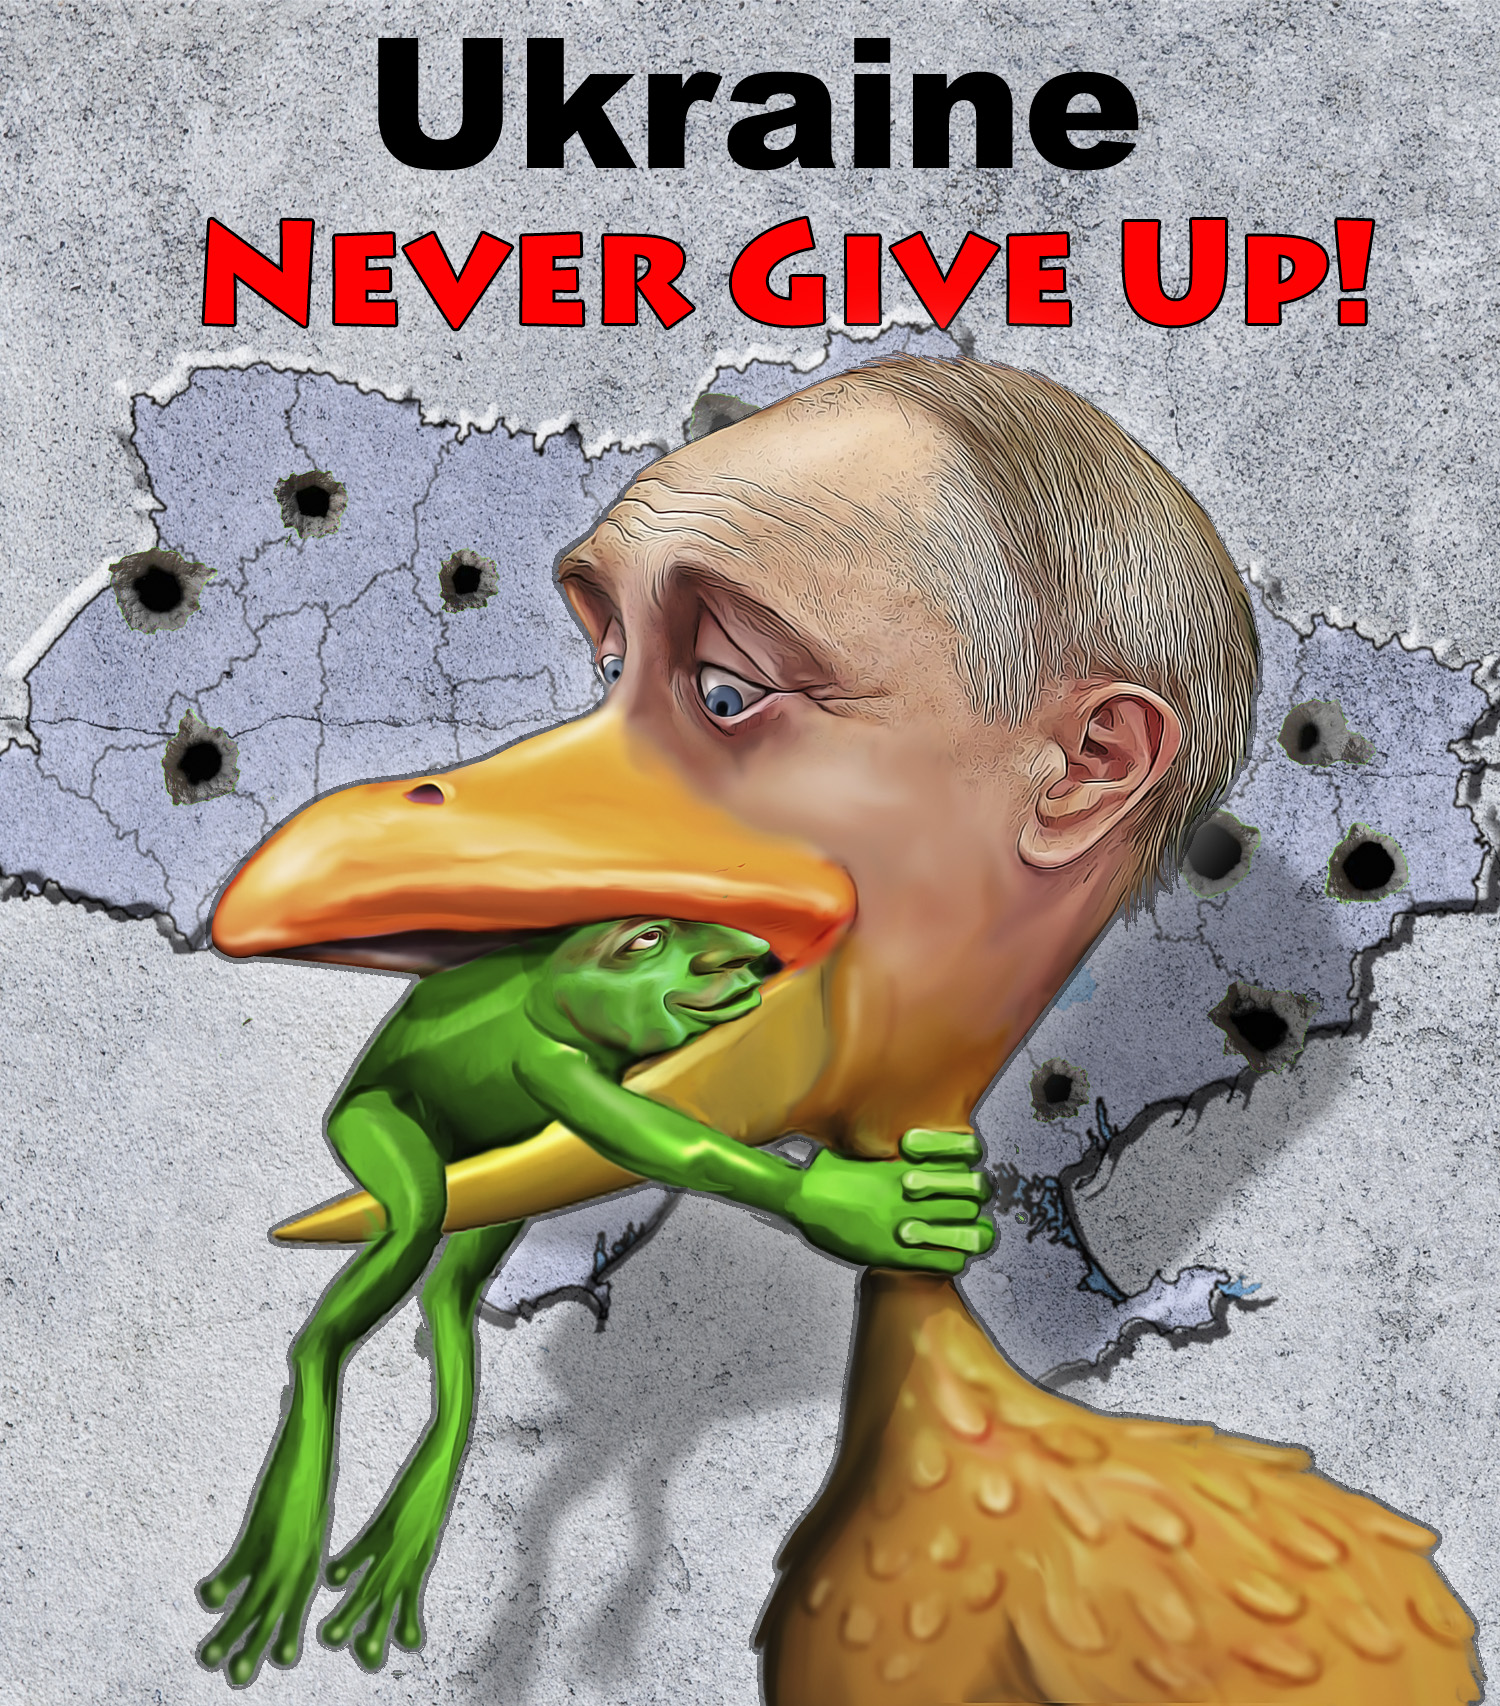 UKRAINE NEVER GIVE UP!